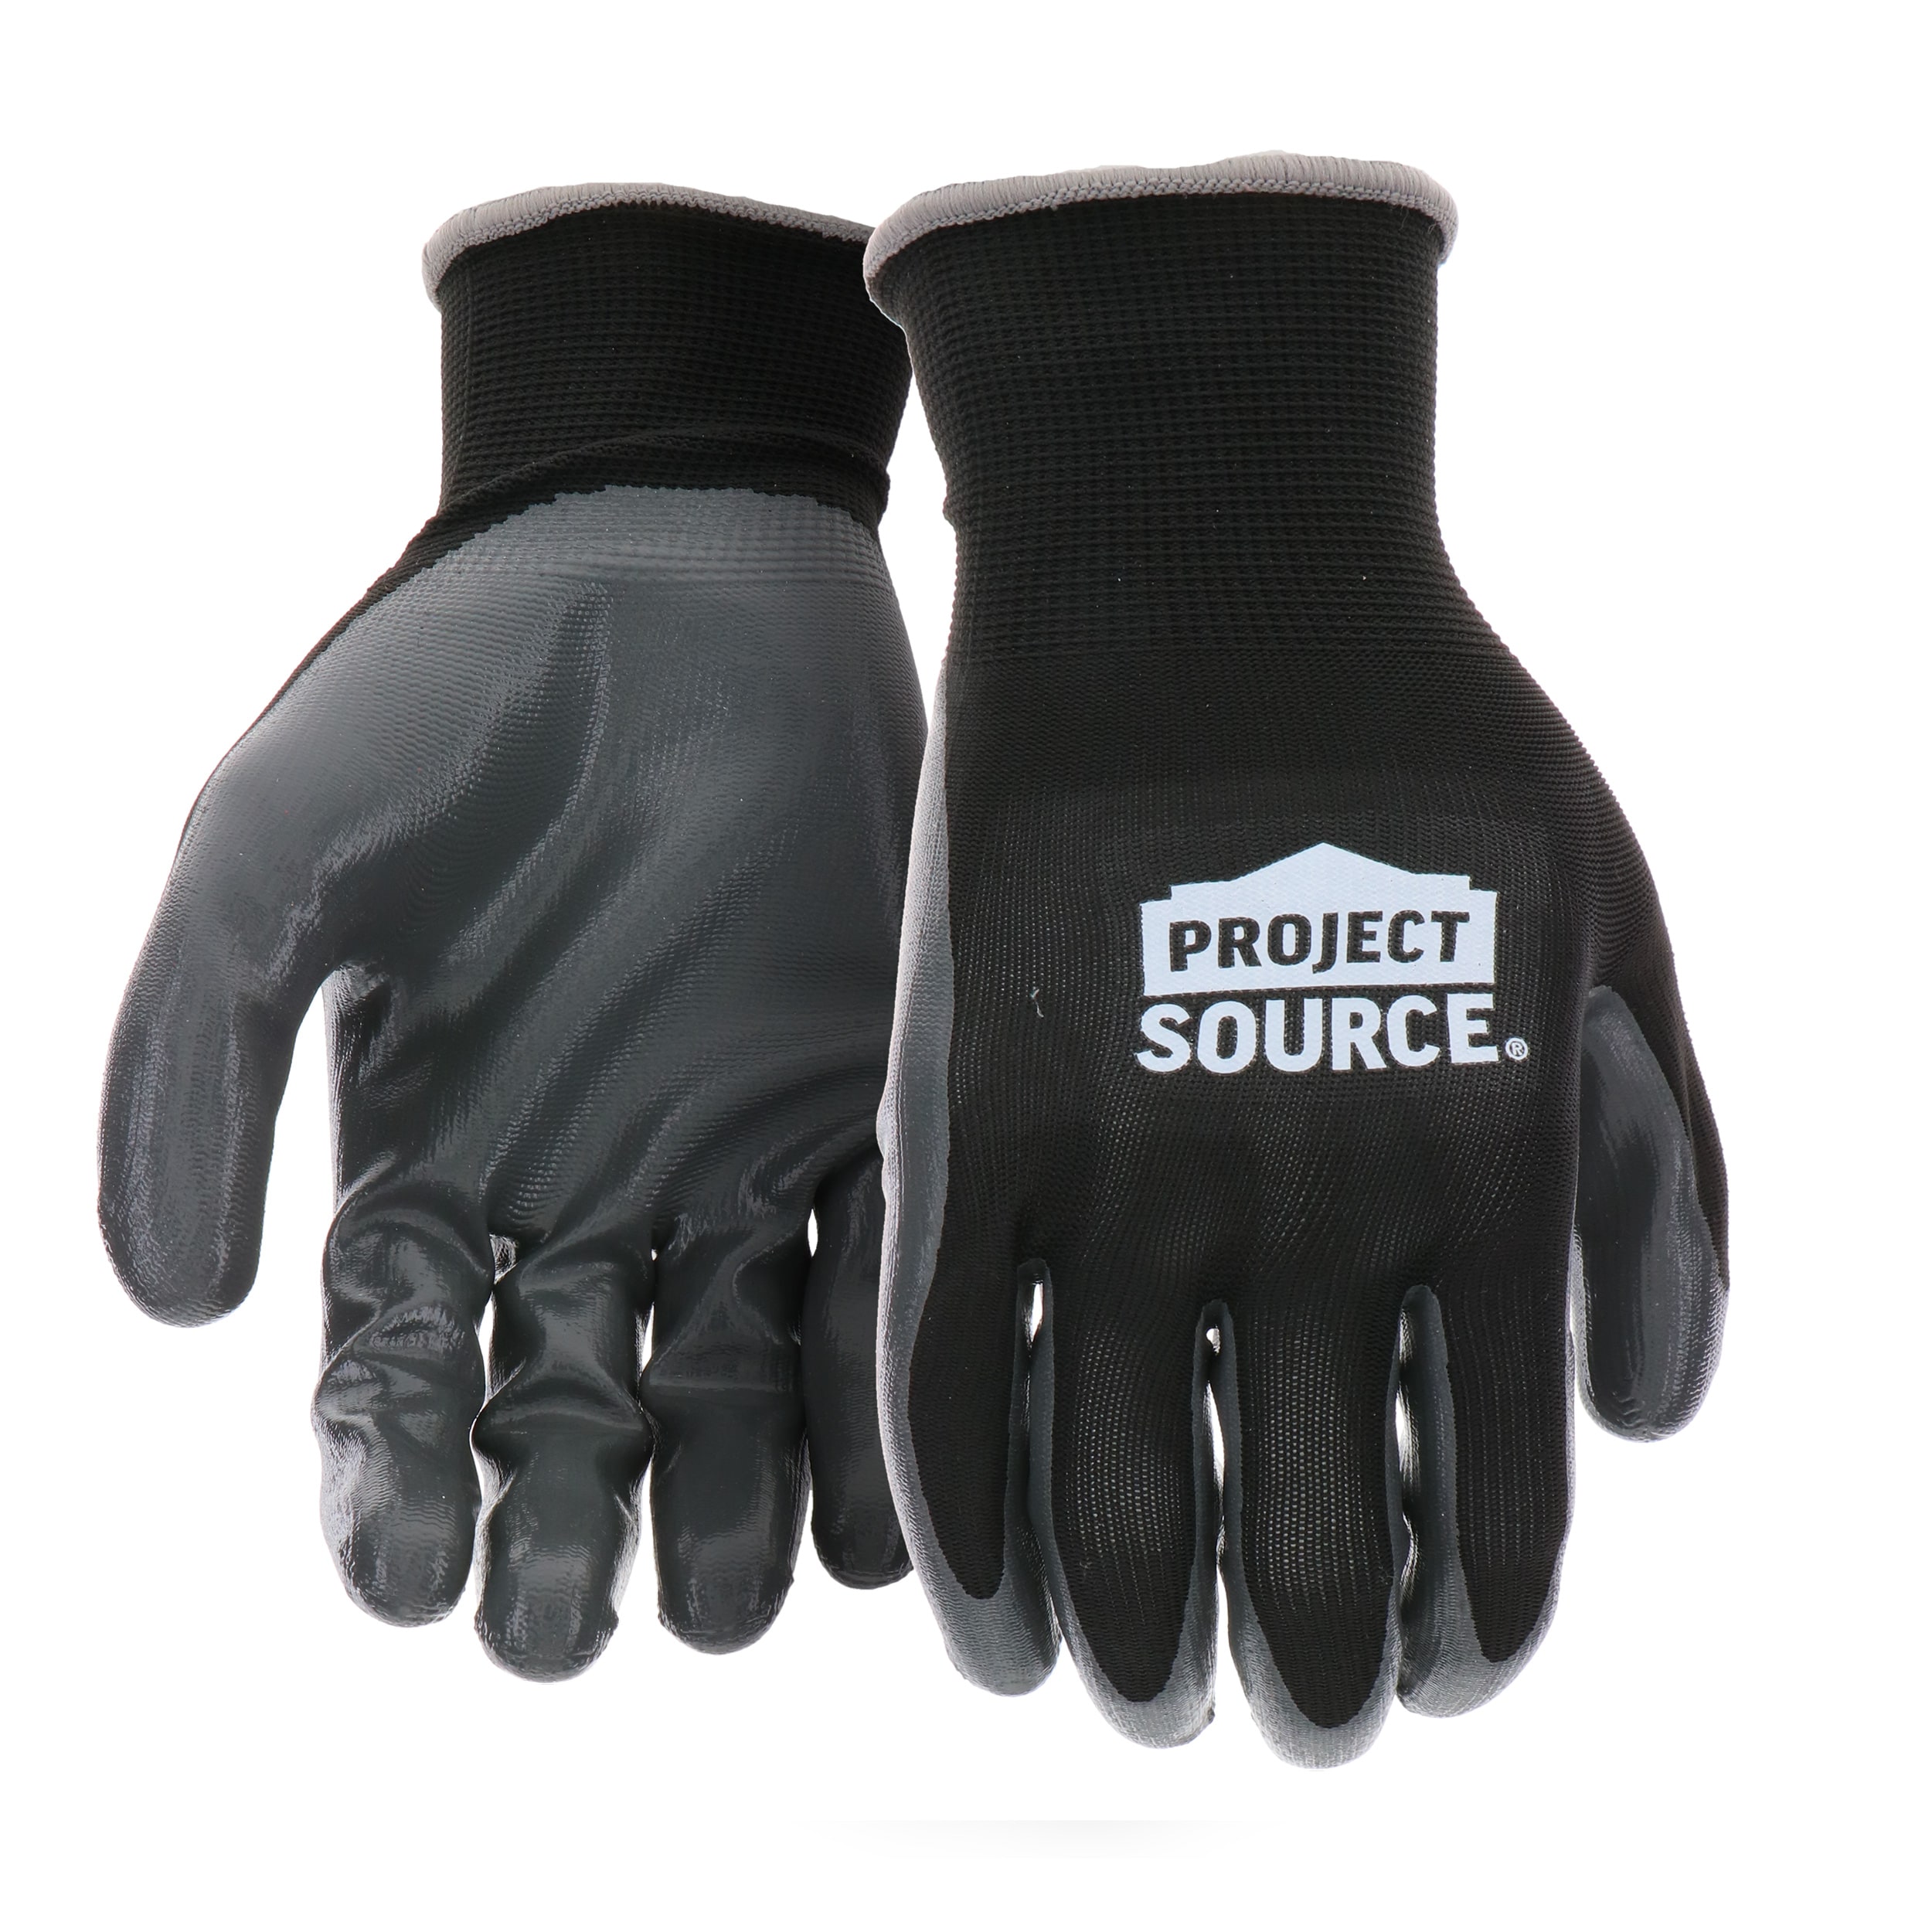 Boss Tactile Grip Men's Large Nitrile Coated Glove (10-Pack)